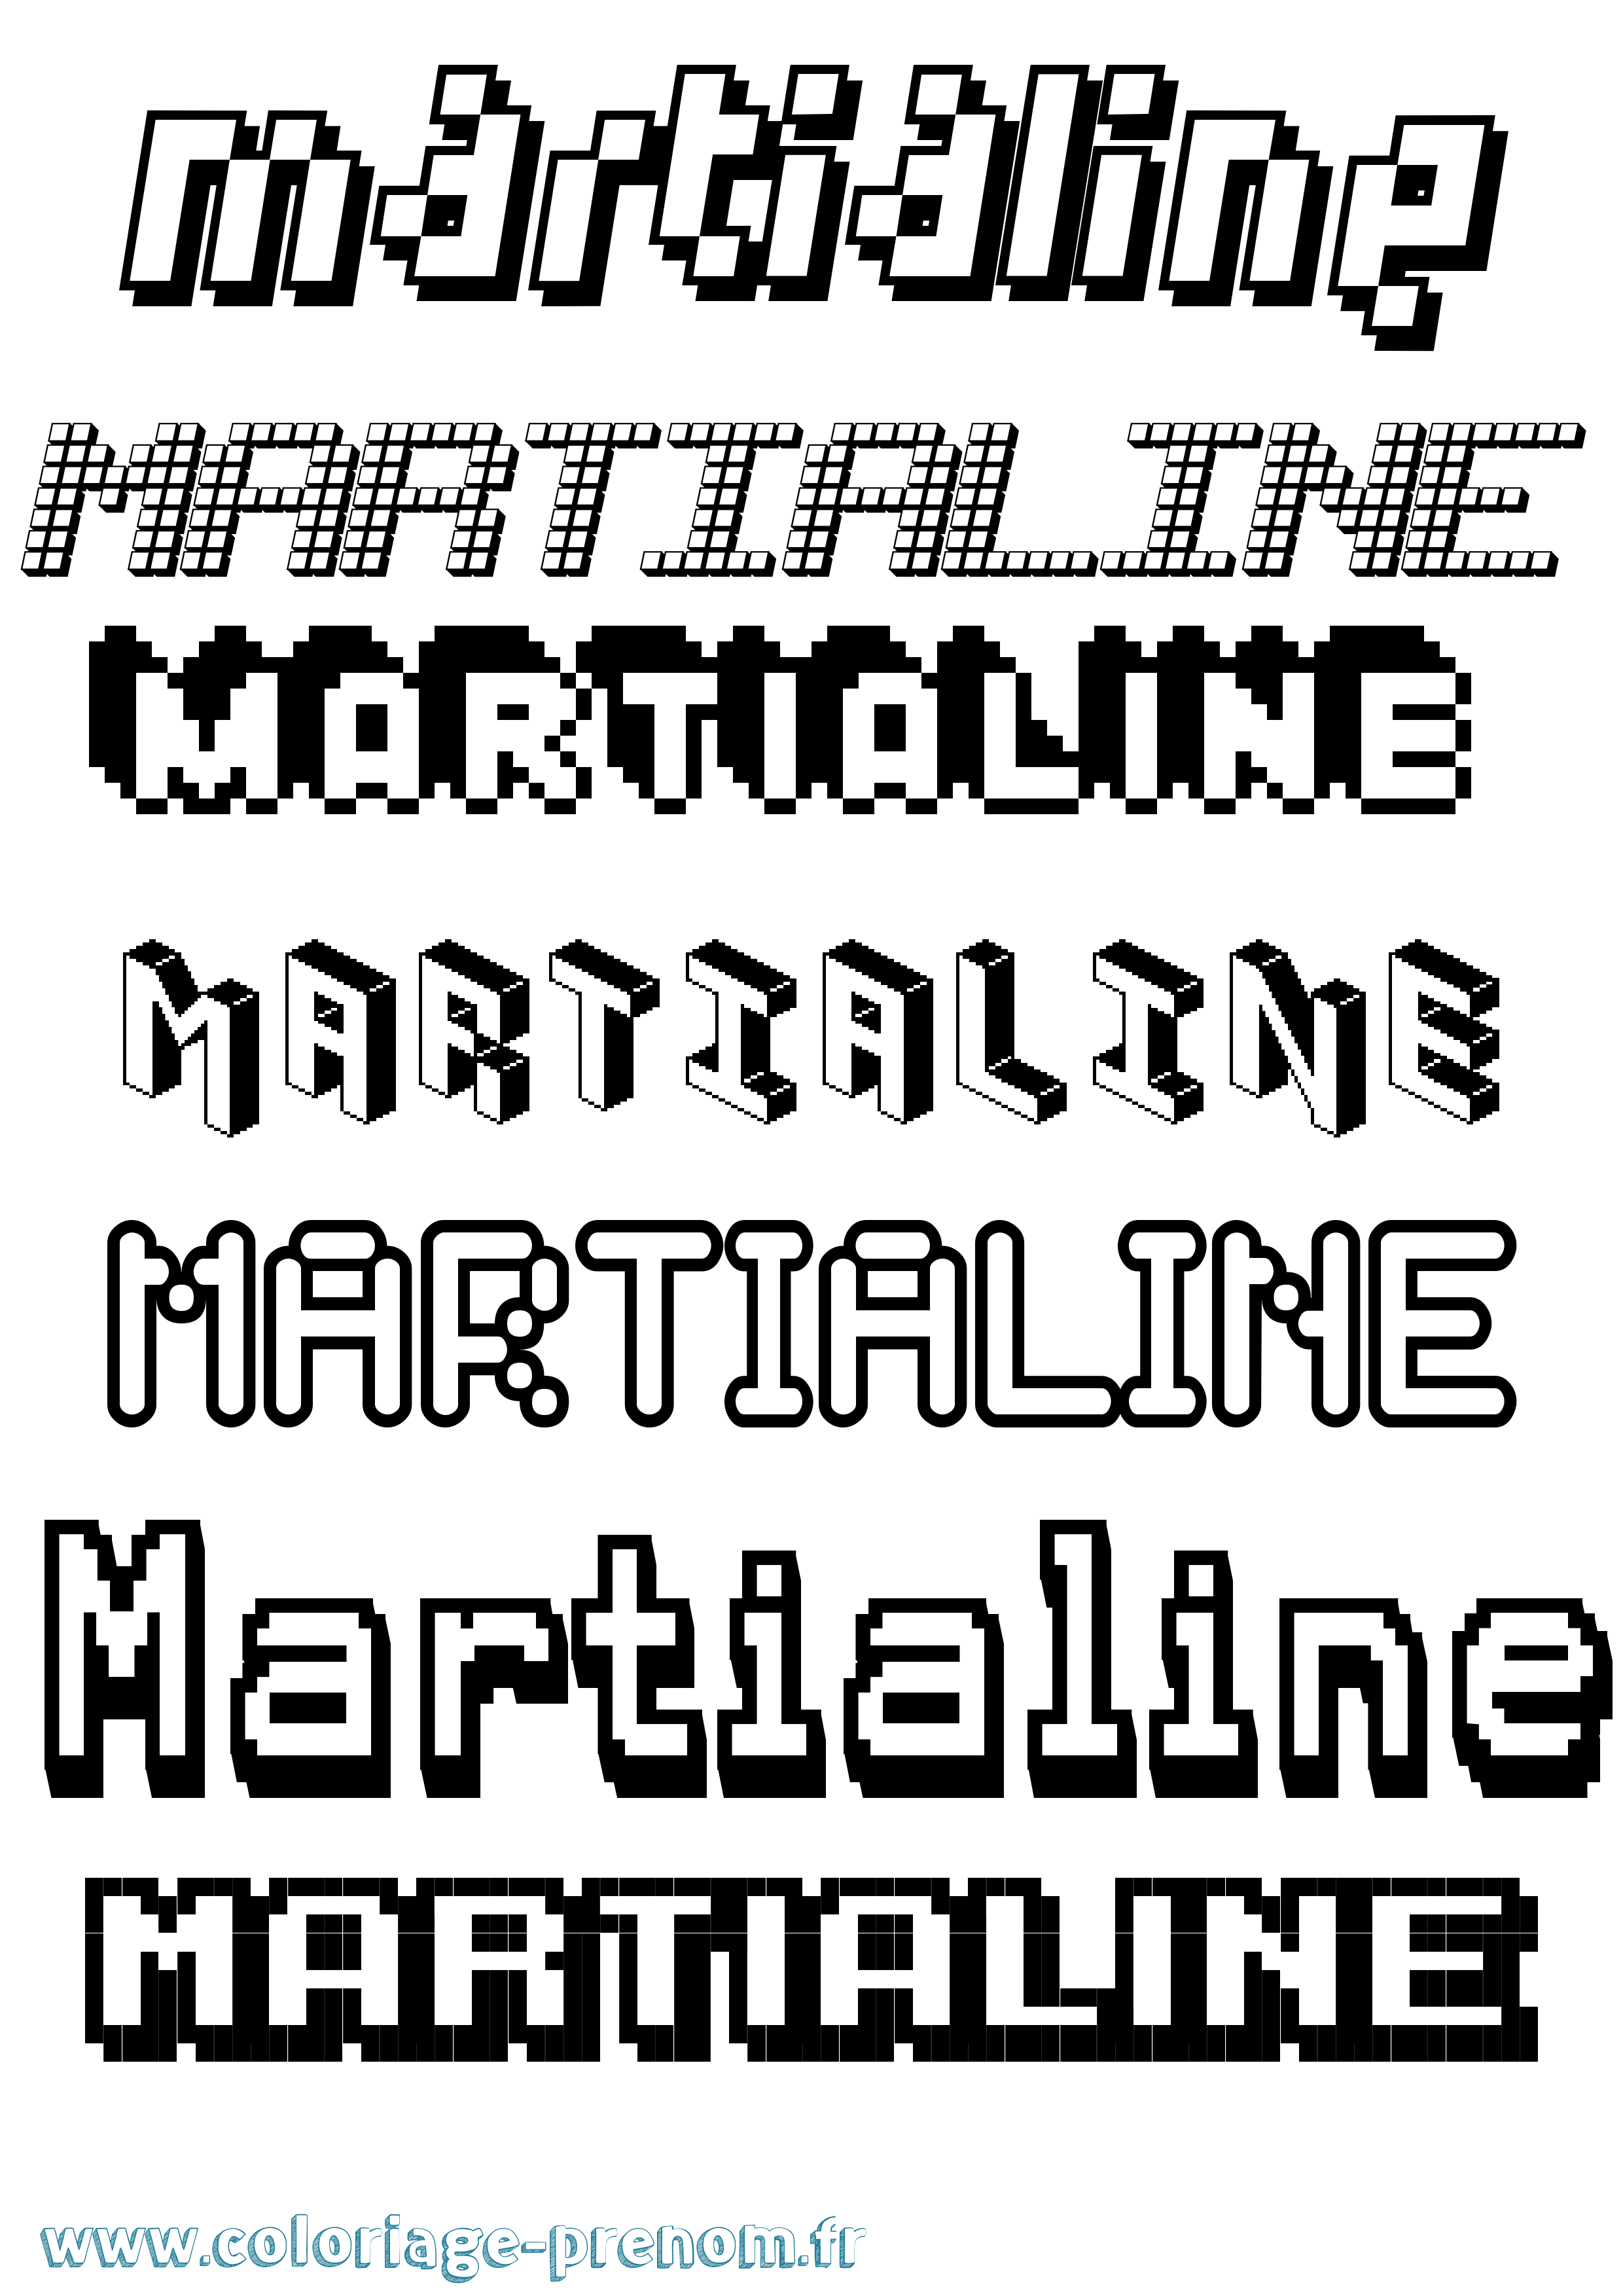 Coloriage prénom Martialine Pixel